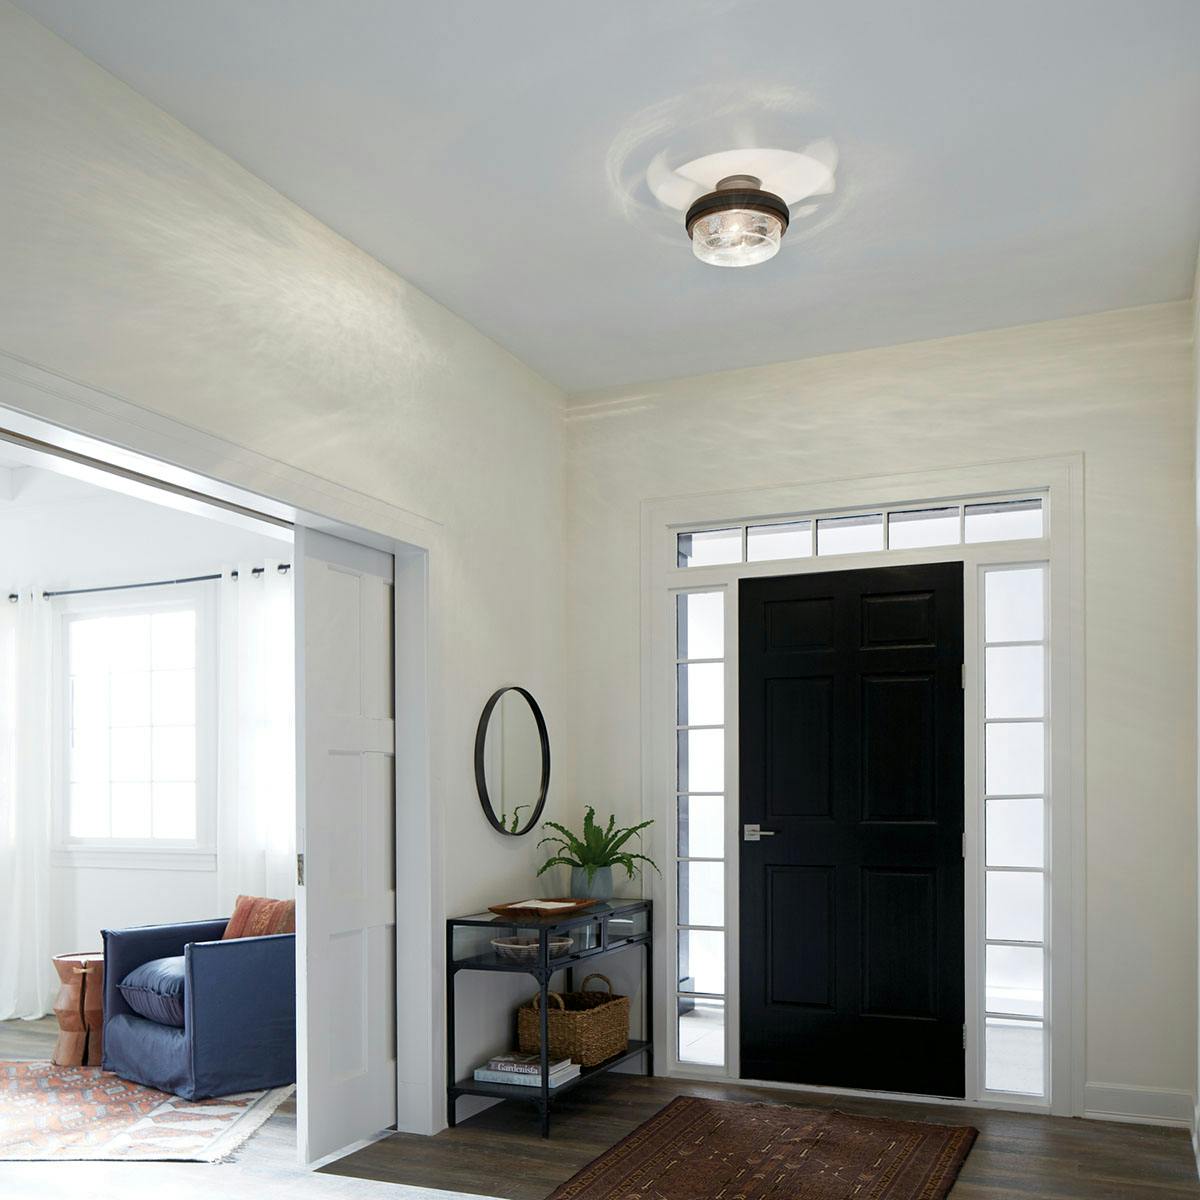 Day time Hallway image featuring Grand Bank flush mount light 44100AUB